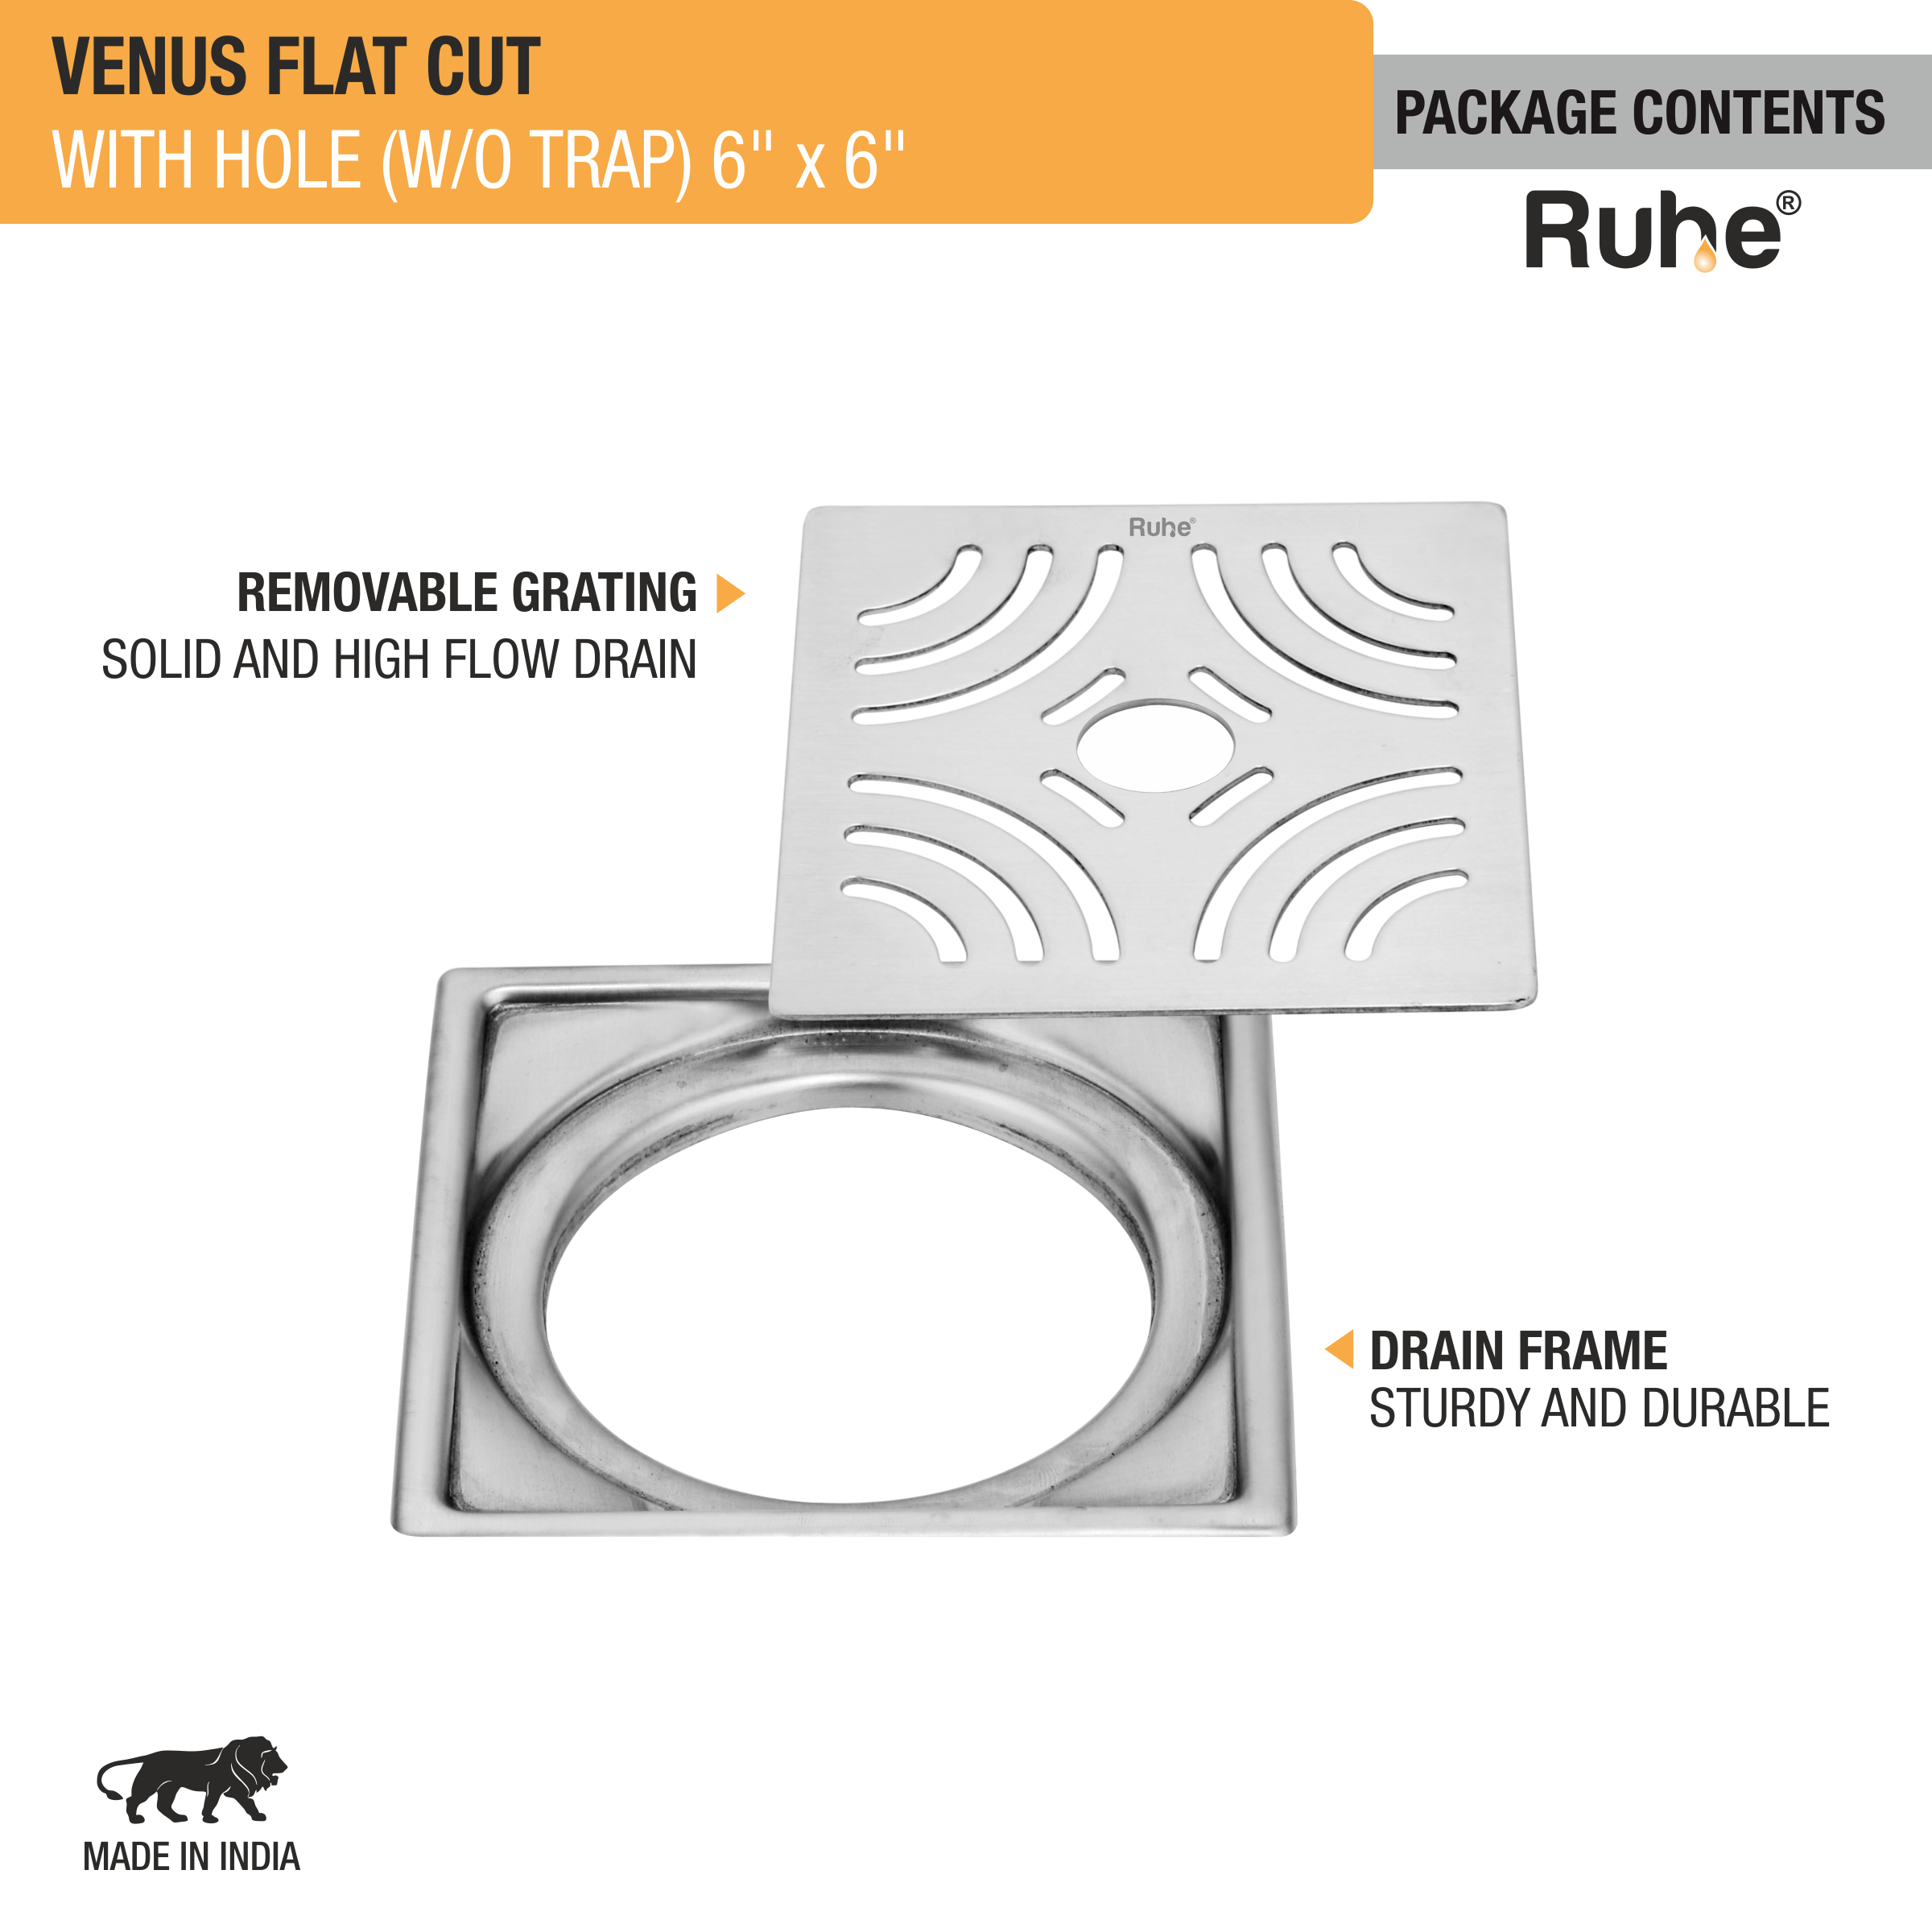 Venus Square Premium Flat Cut Floor Drain (6 x 6 Inches) with Hole package content